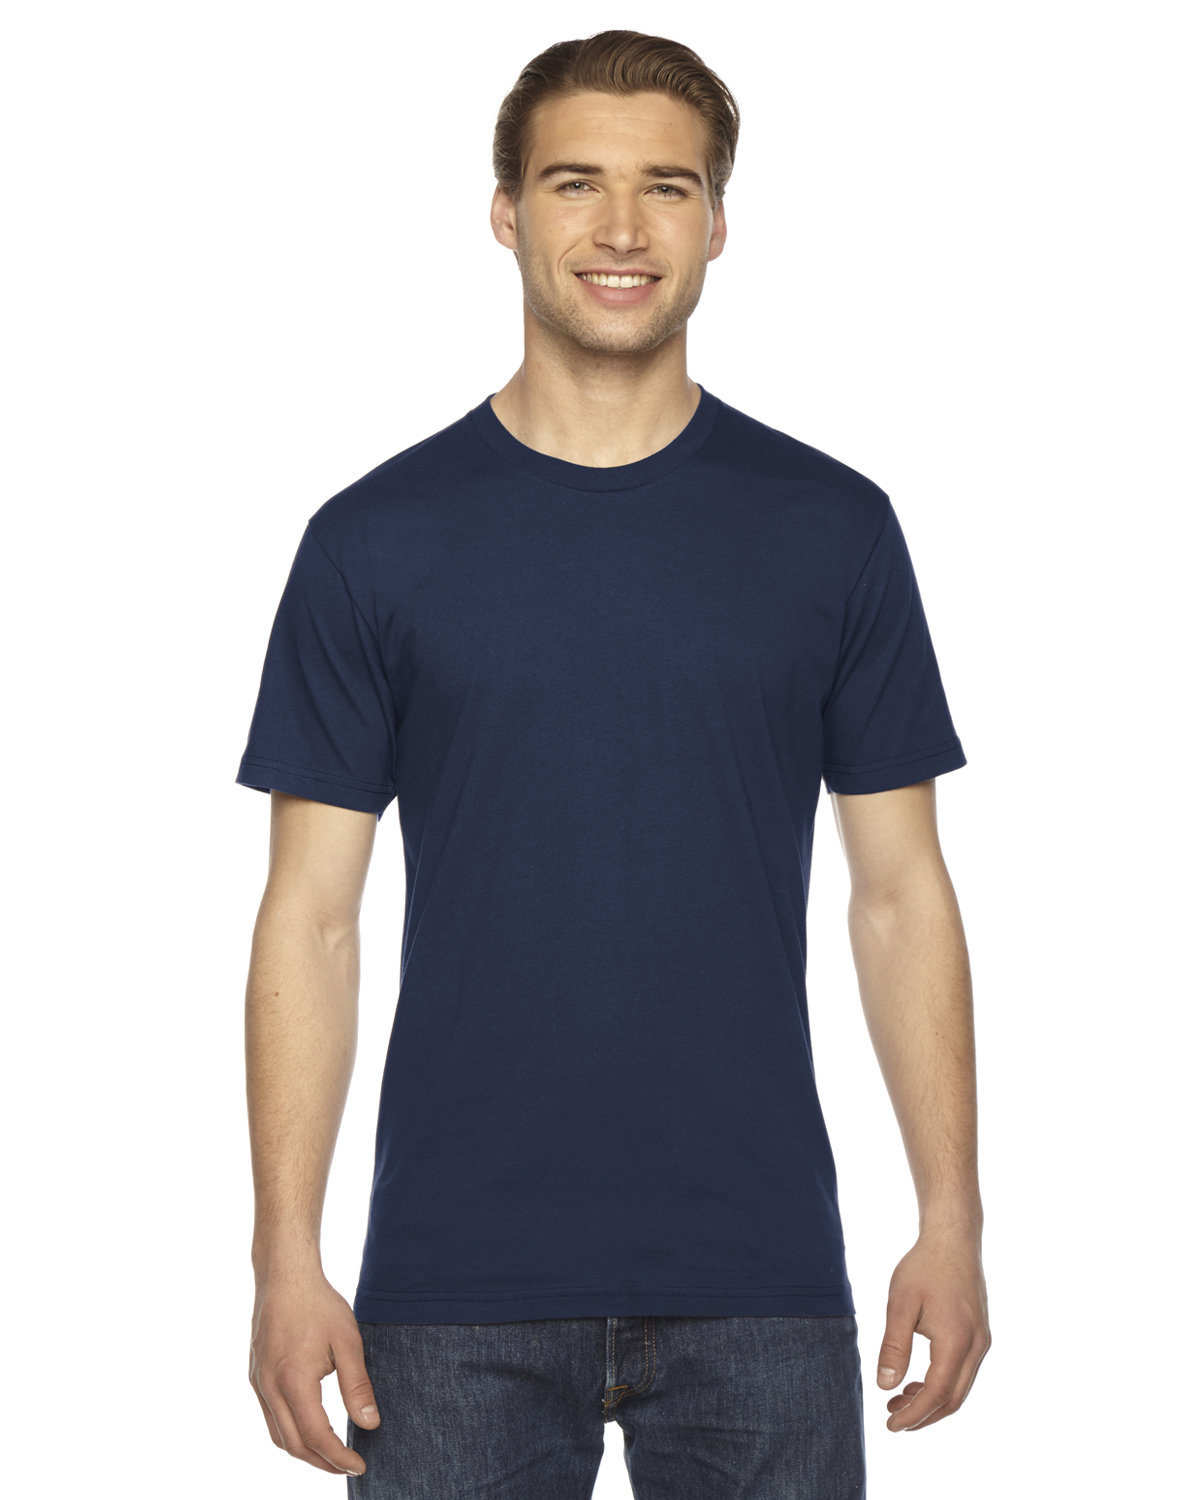 American Apparel Unisex Fine Jersey Short-Sleeve T-Shirt NAVY 